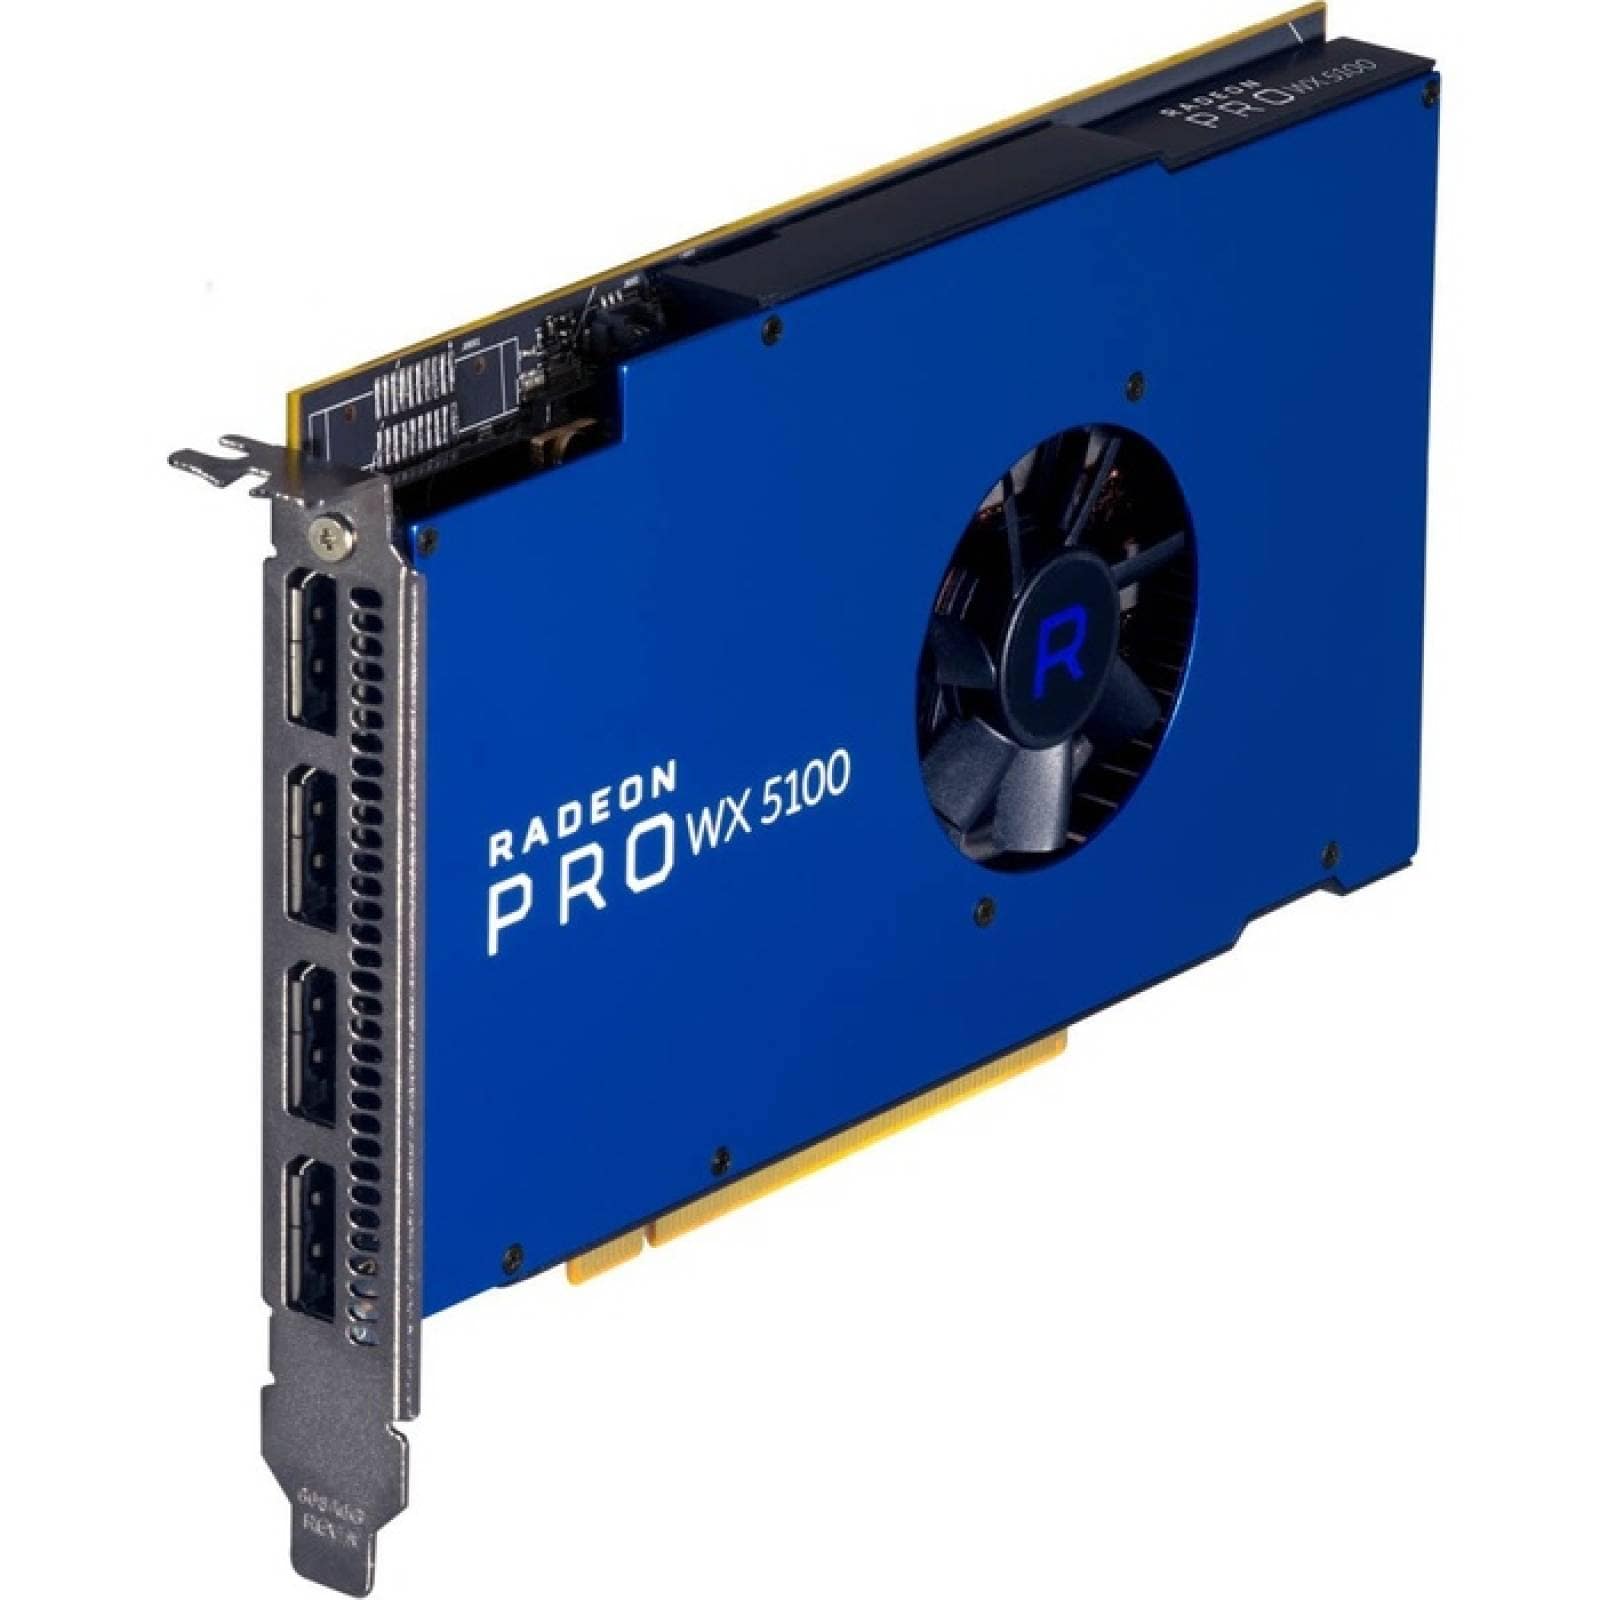 8.0GB AMD Radeon Pro WX-5100 Blue Edition PCI Express Quad Video Card